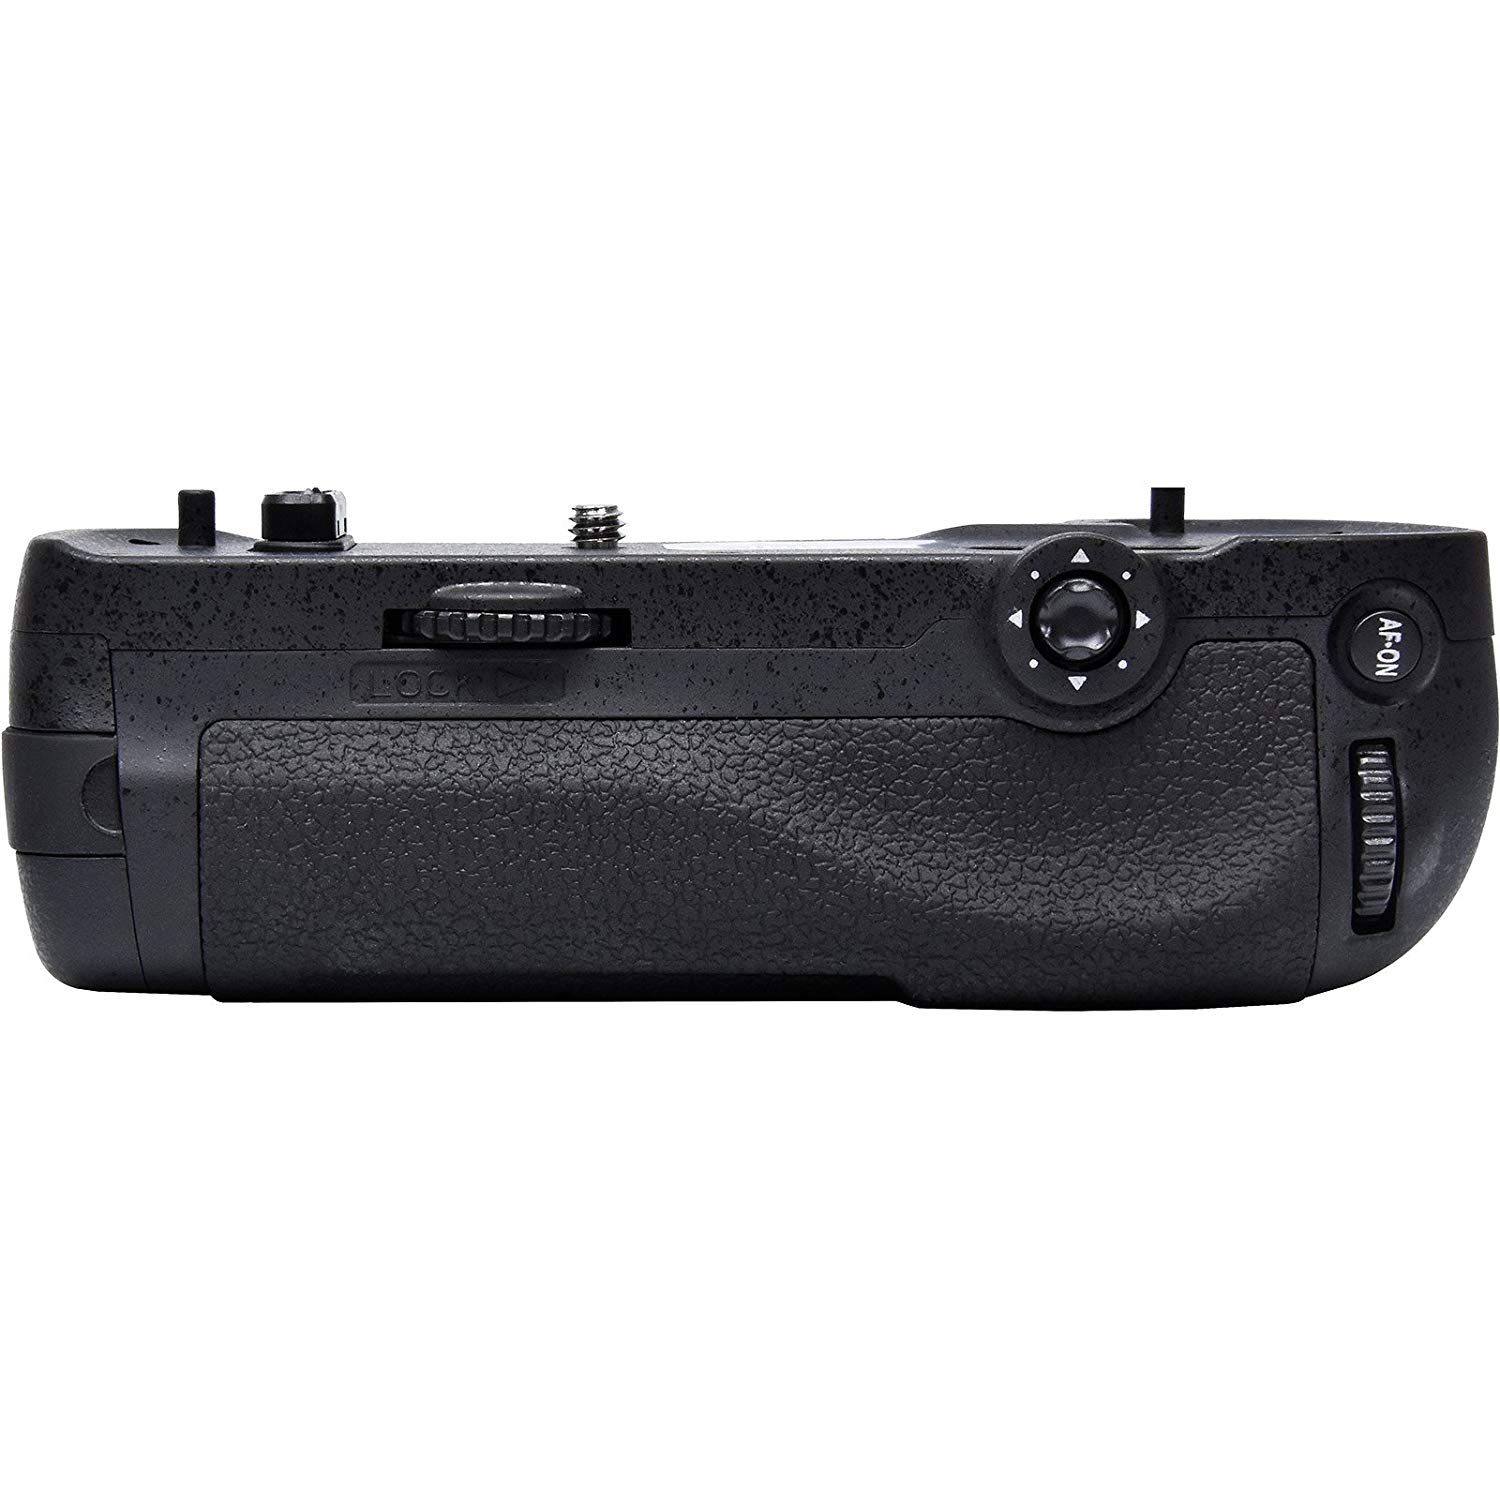 Photos - Camera Battery Vivitar Pro Series Multi-Power Battery Grip for Nikon D500 DSLR Camera PG 